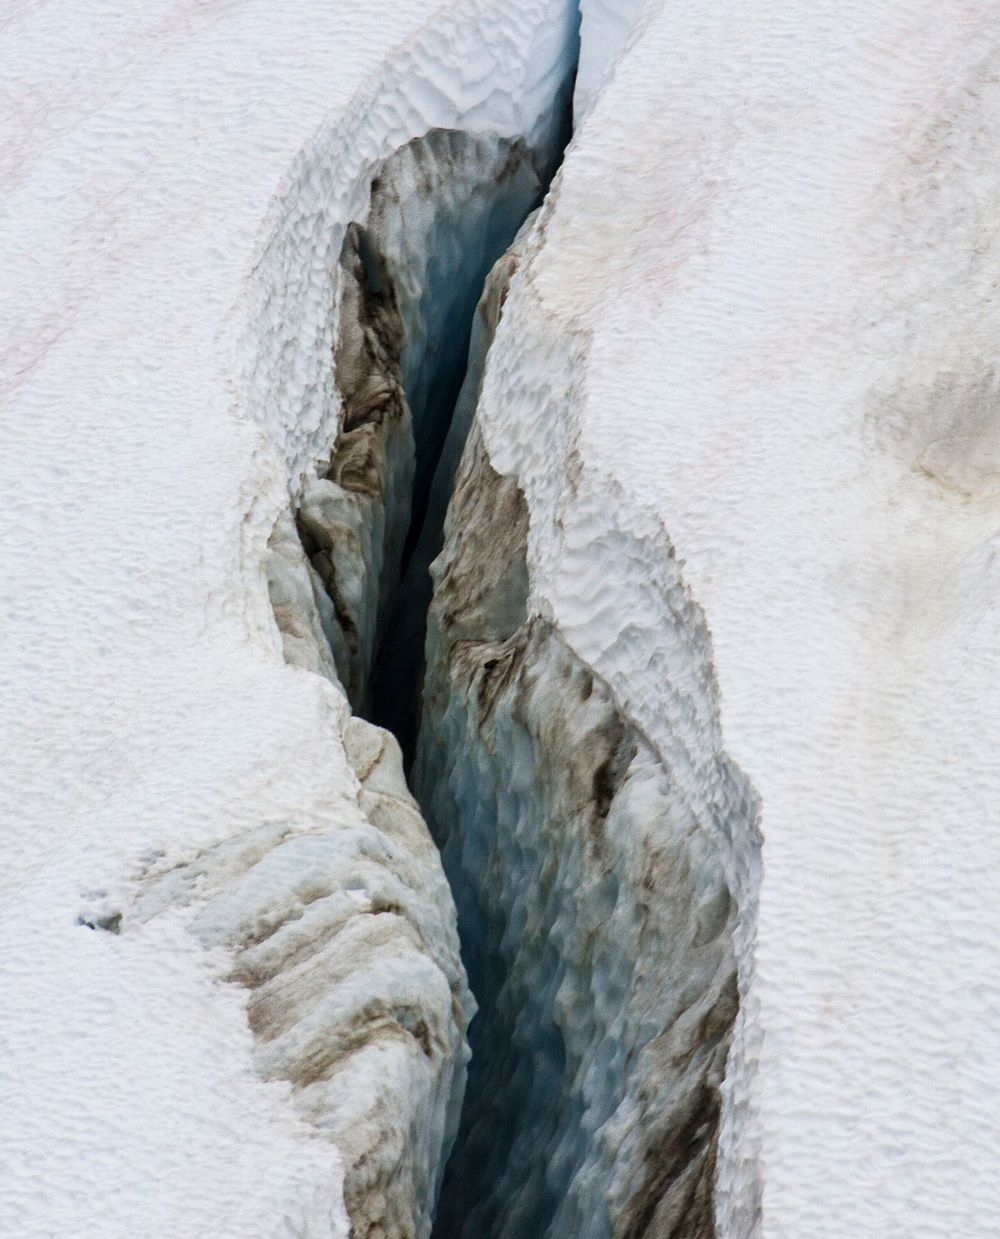 Ice Crevasse along Boulder Ridge at Mt Baker, Mt Baker Snoqualmie National Forest. Original public domain image from Flickr